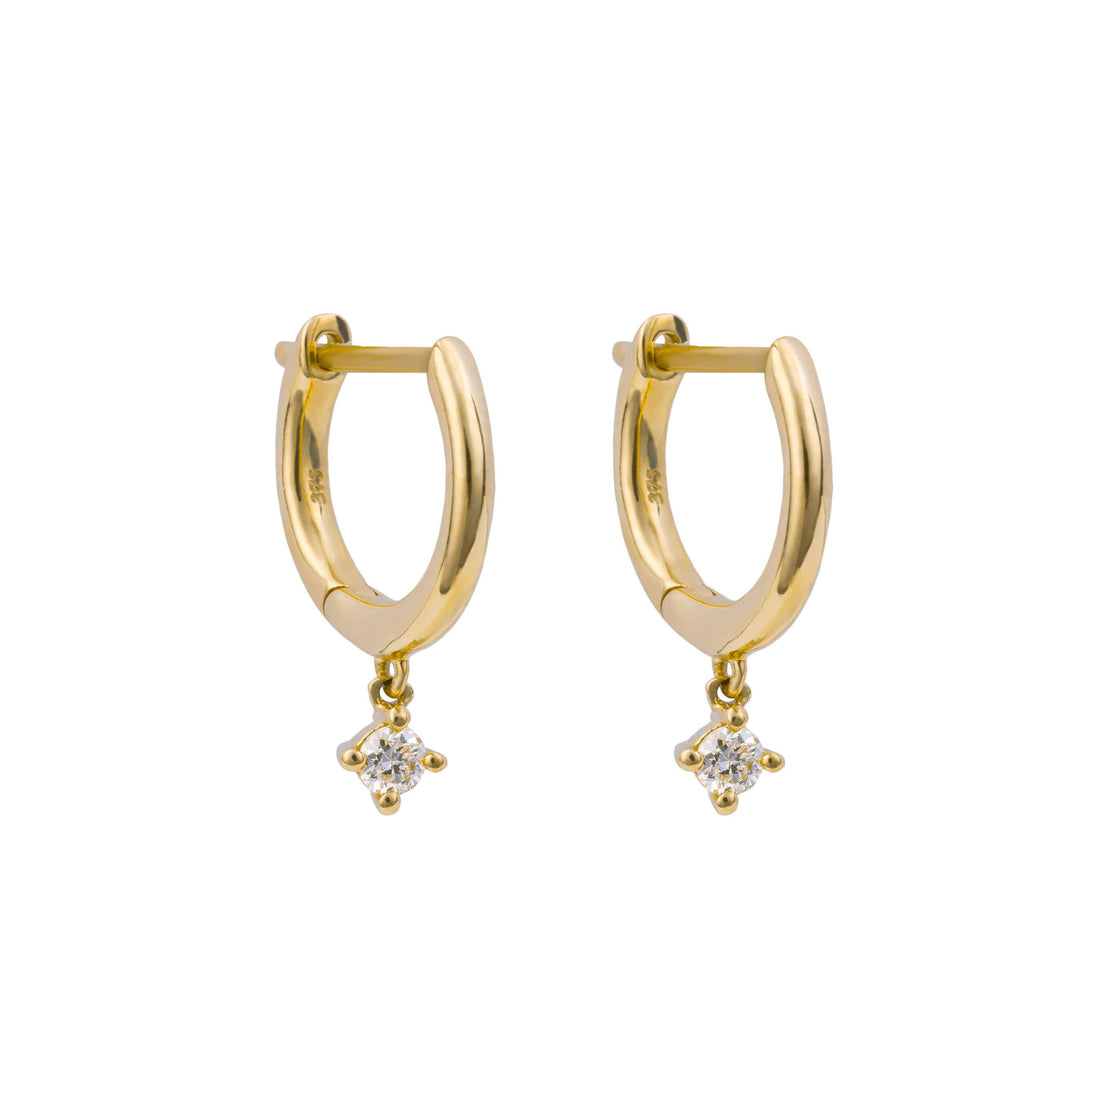 Hoop Earrings with Round Diamond Drop in 9ct Yellow Gold - Robert Anthony Jewellers, Edinburgh